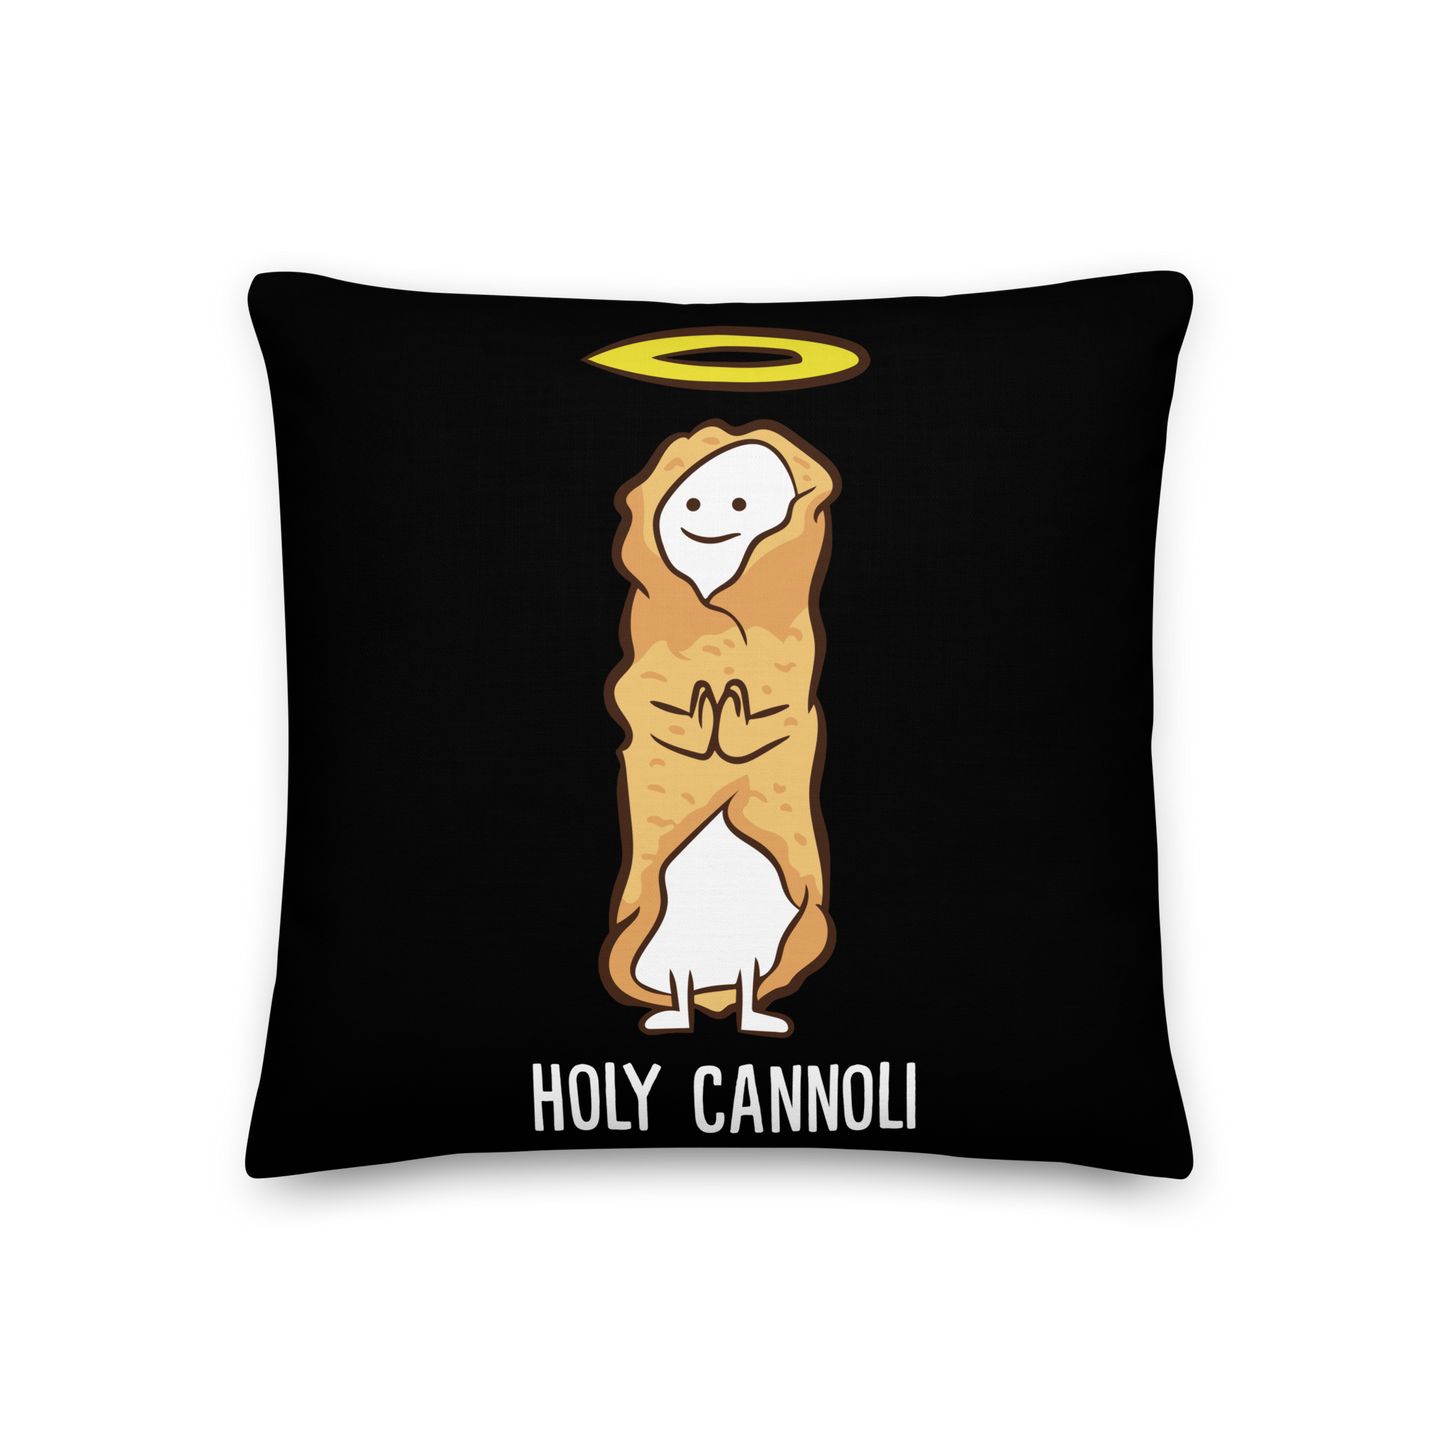 Holy Cannoli Cartoon Pillow: Deliciously Playful Decor